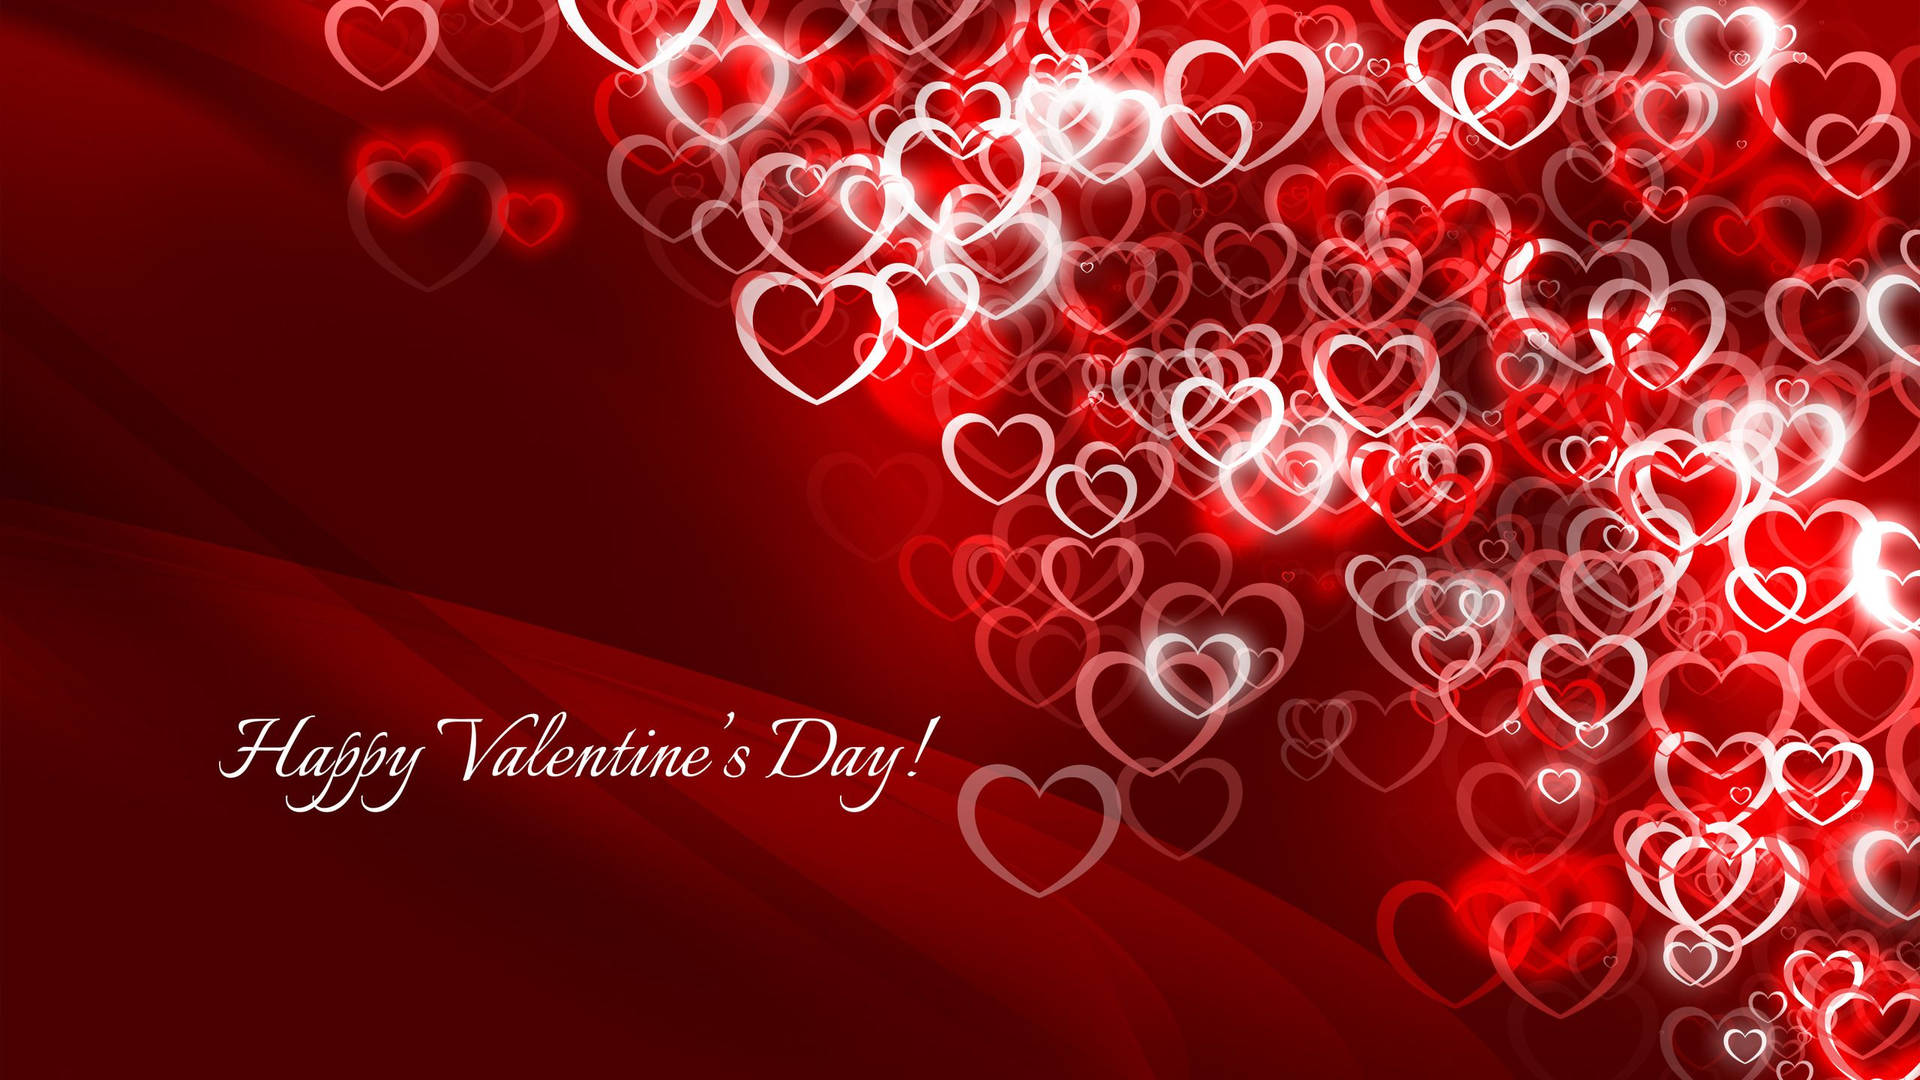 Crystalizing Valentine's Hearts Desktop Wallpaper